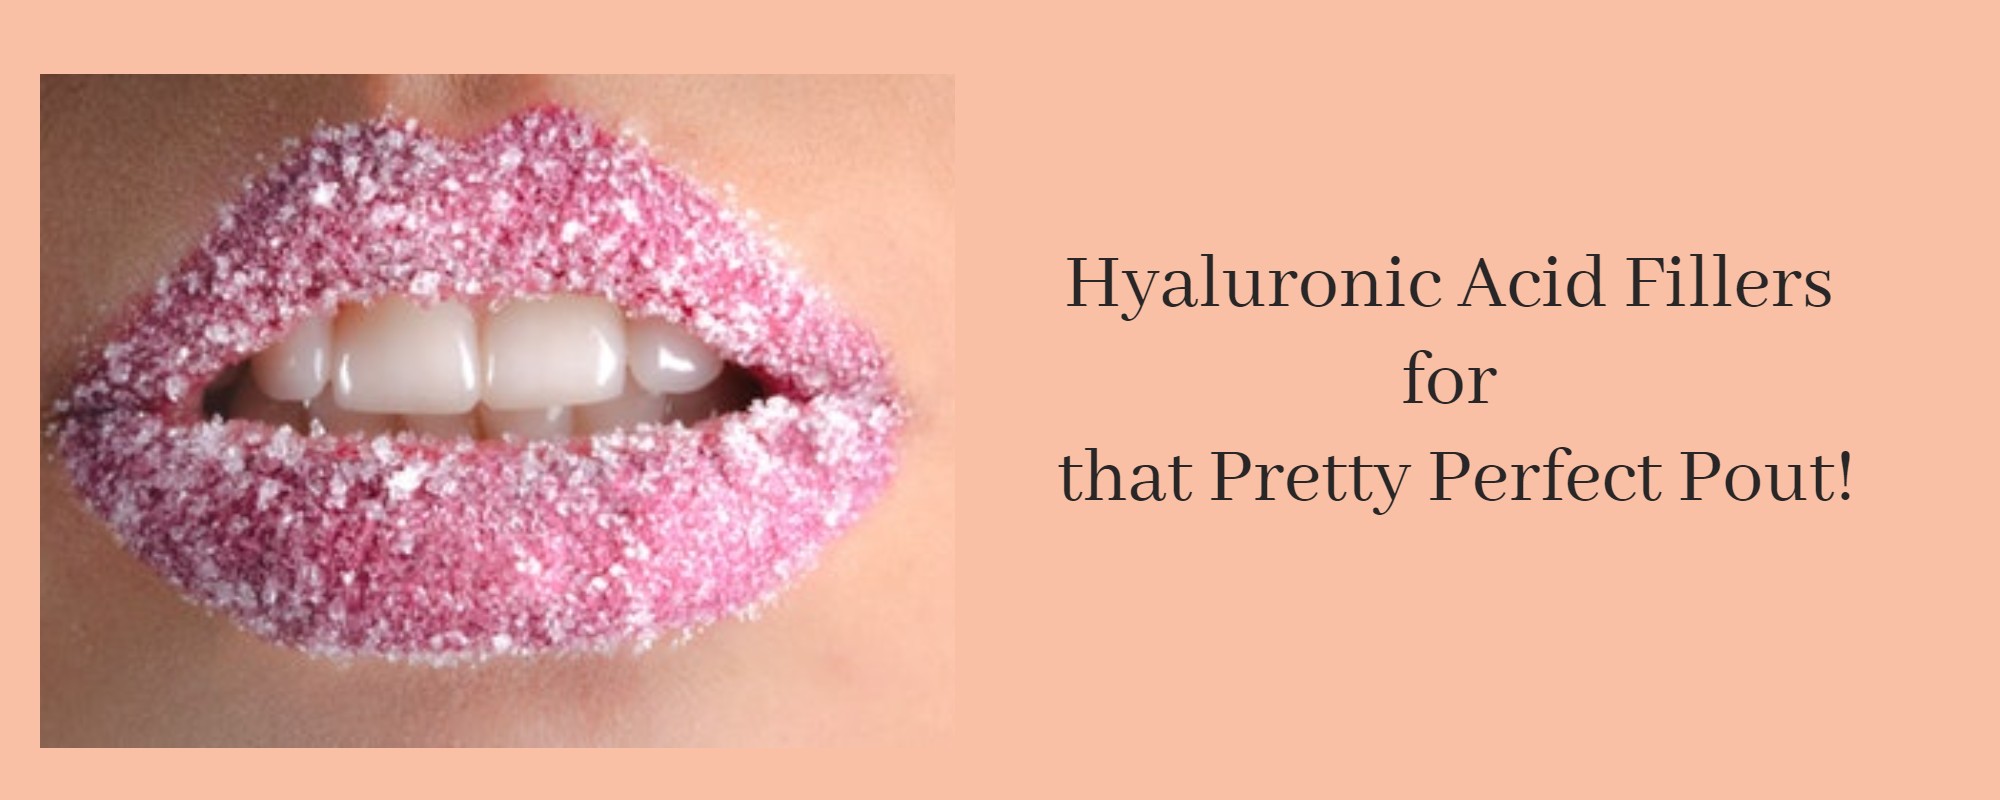 Hyaluronic Acid Fillers for Lips